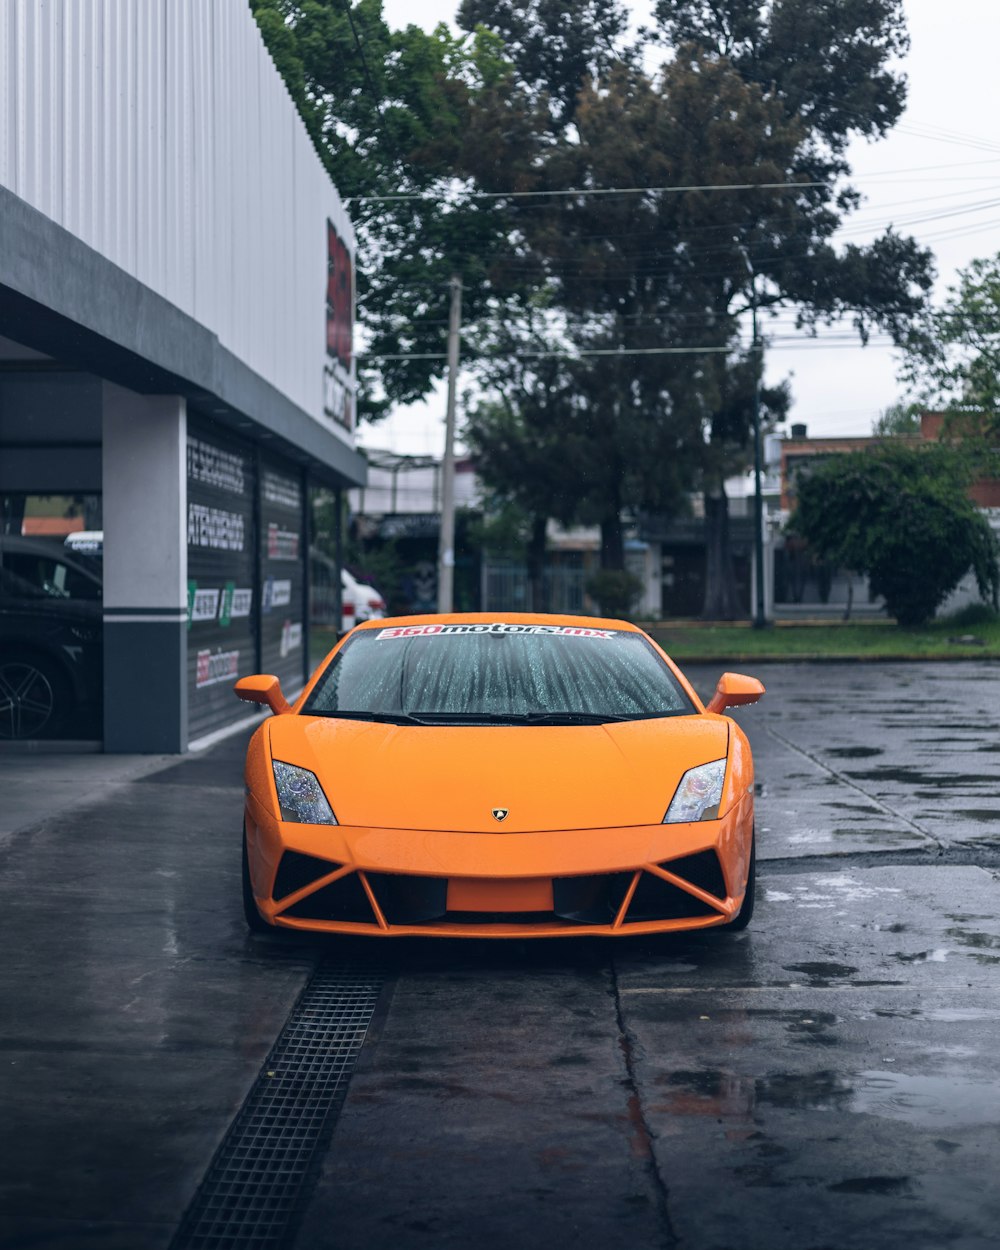 orangefarbener Lamborghini Aventador am Straßenrand geparkt